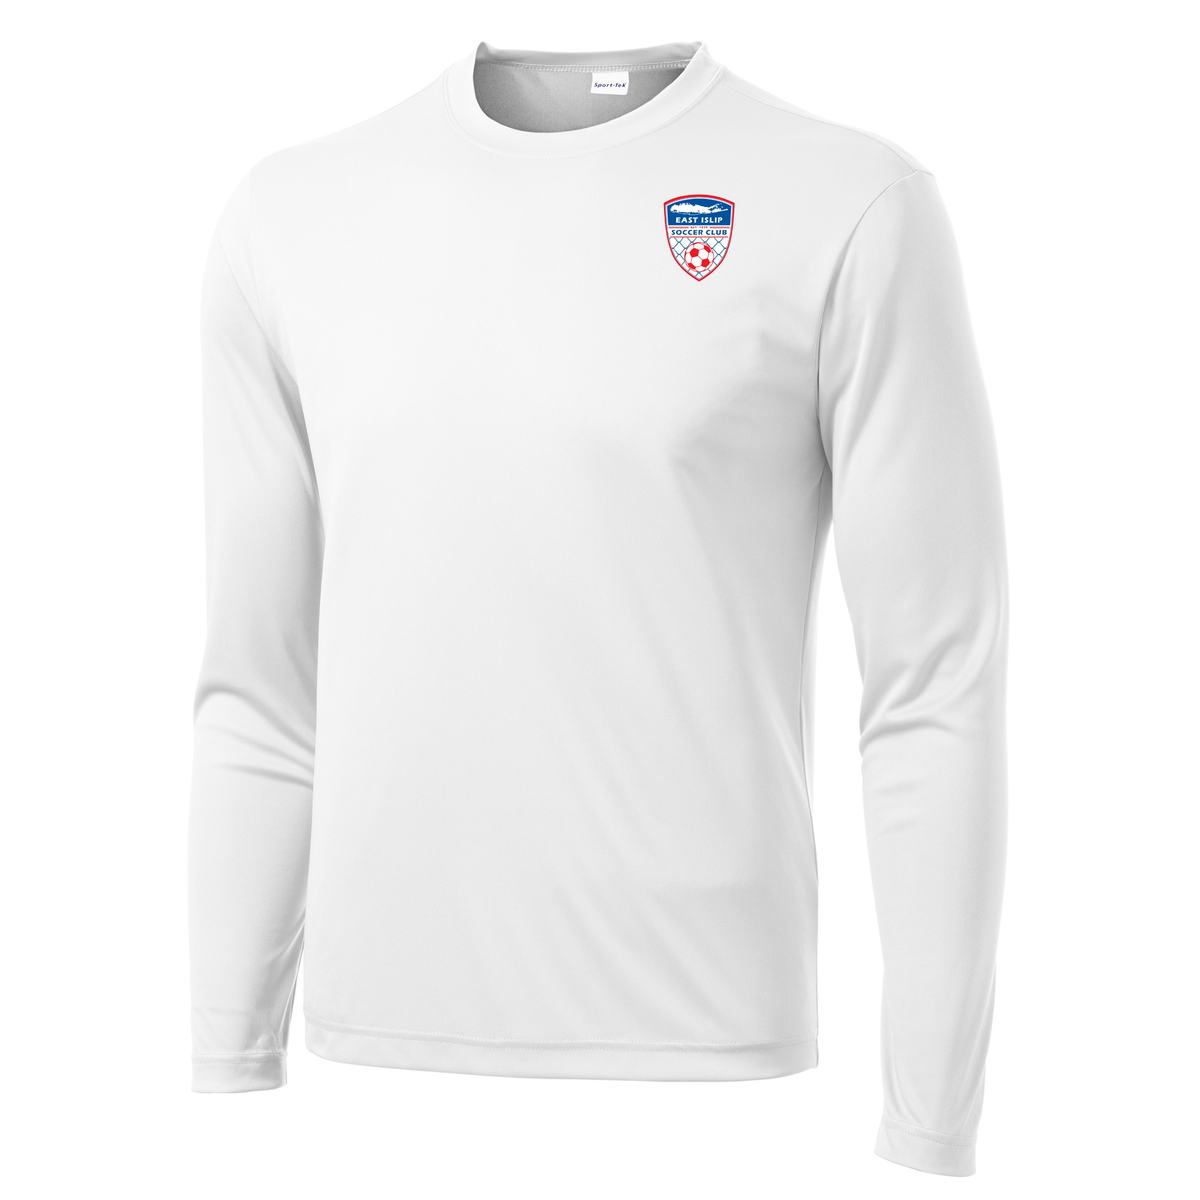 East Islip Soccer Club  Long Sleeve Performance Shirt